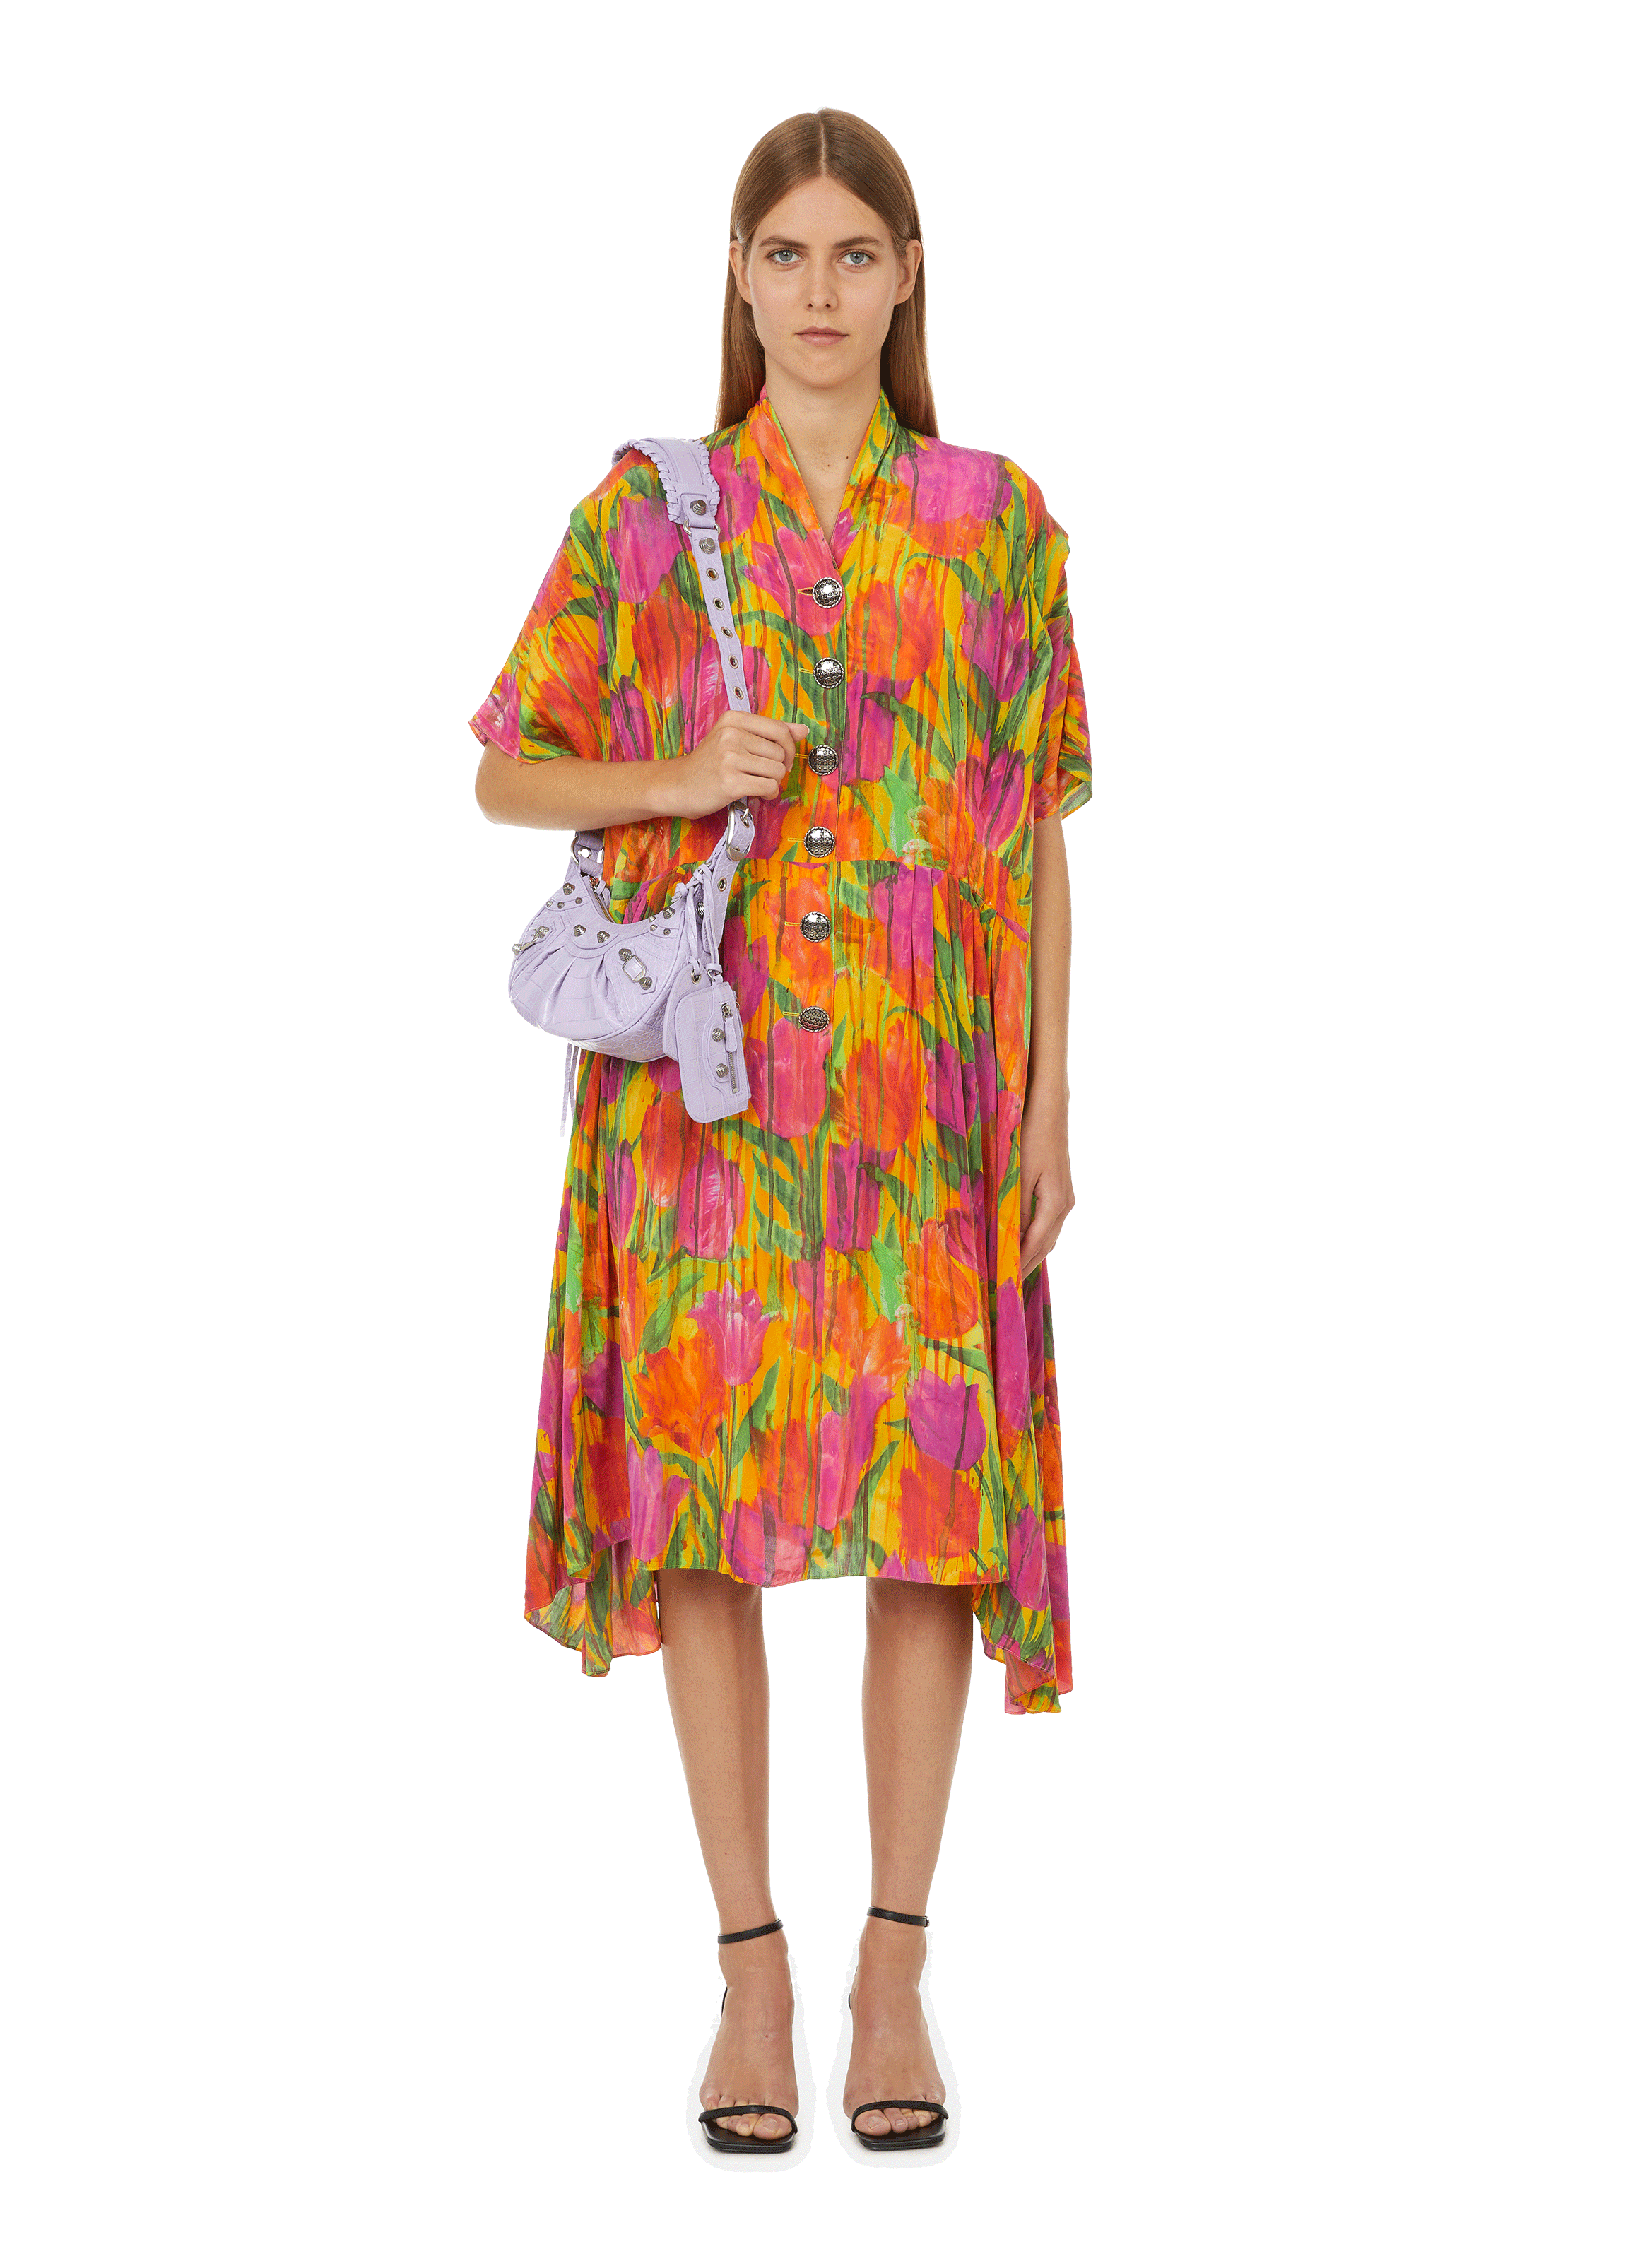 Balenciaga  ElbowSleeve FloralPrint FitandFlare Dress  Story  Rain